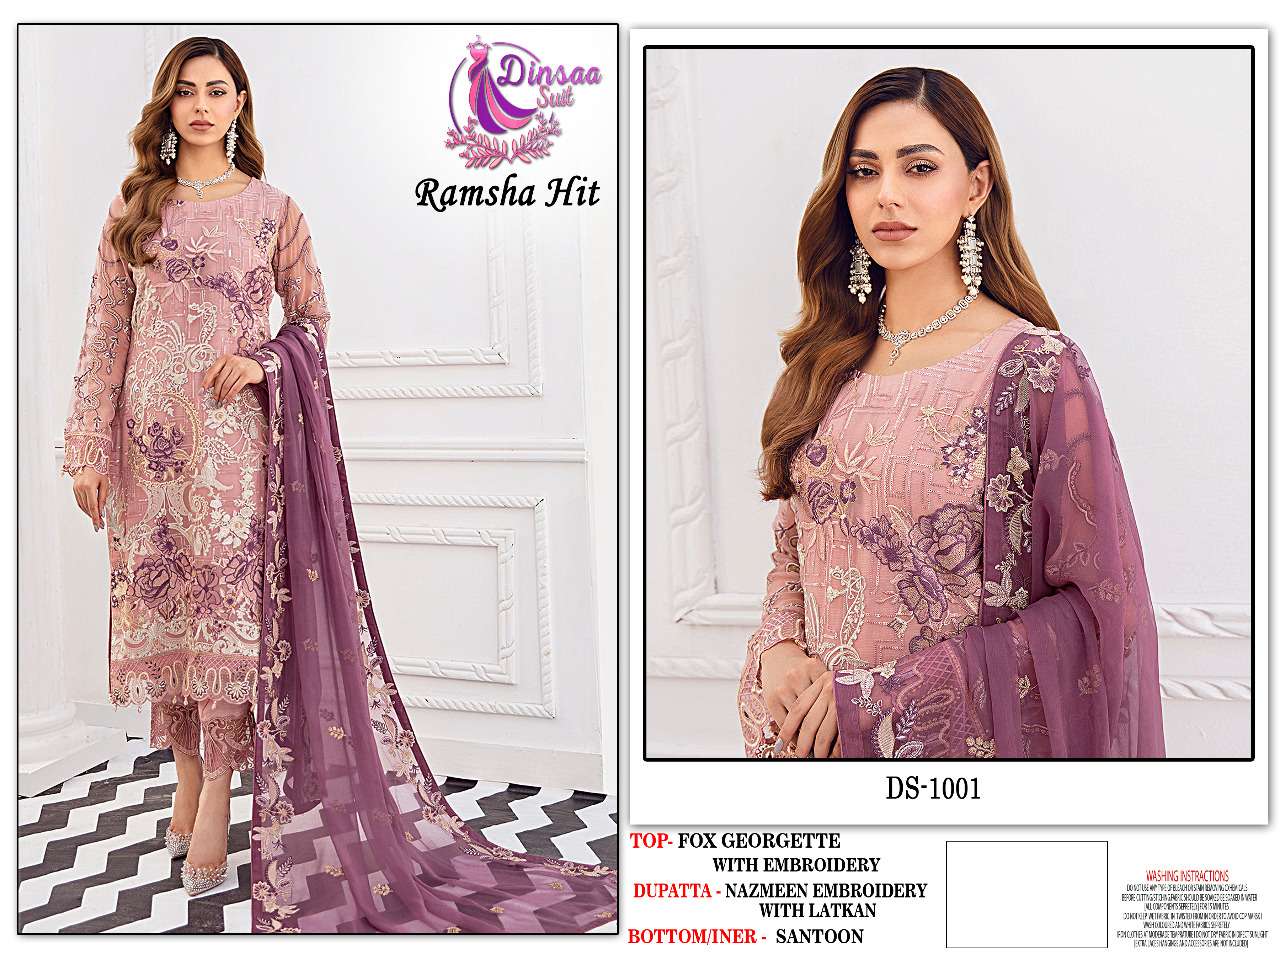 dinsaa suit ramsha hit pakistani concept of dresses 